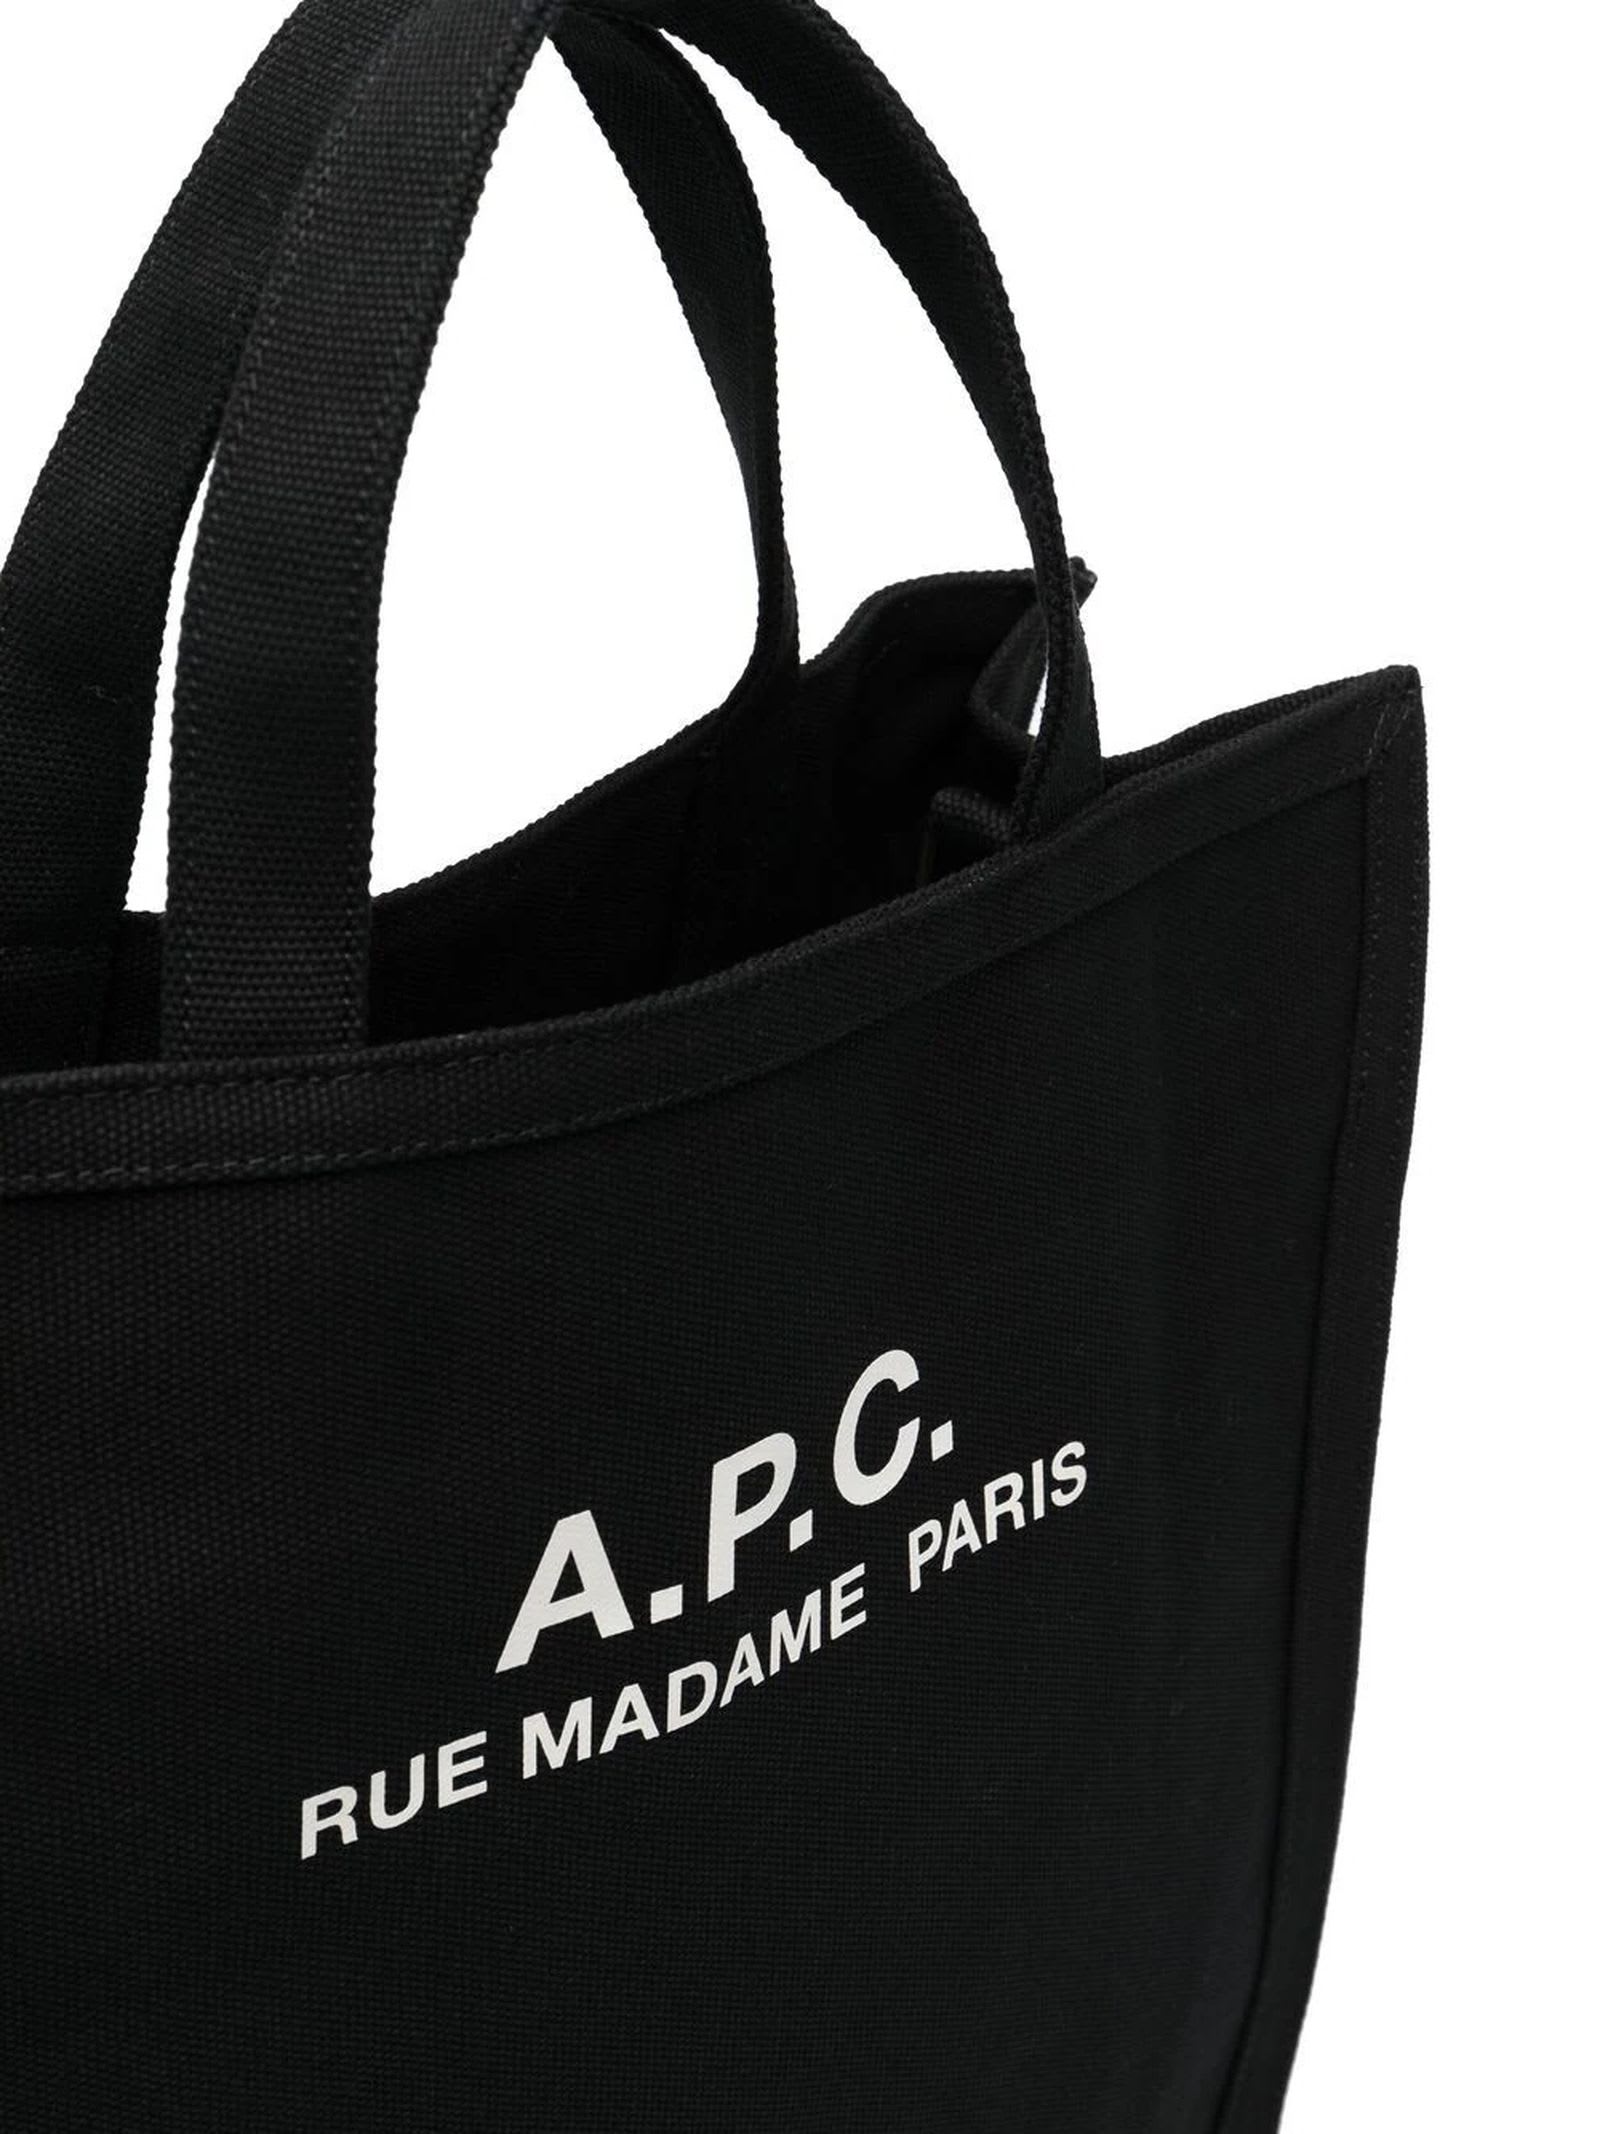 Shop Apc A.p.c. Bags.. Black